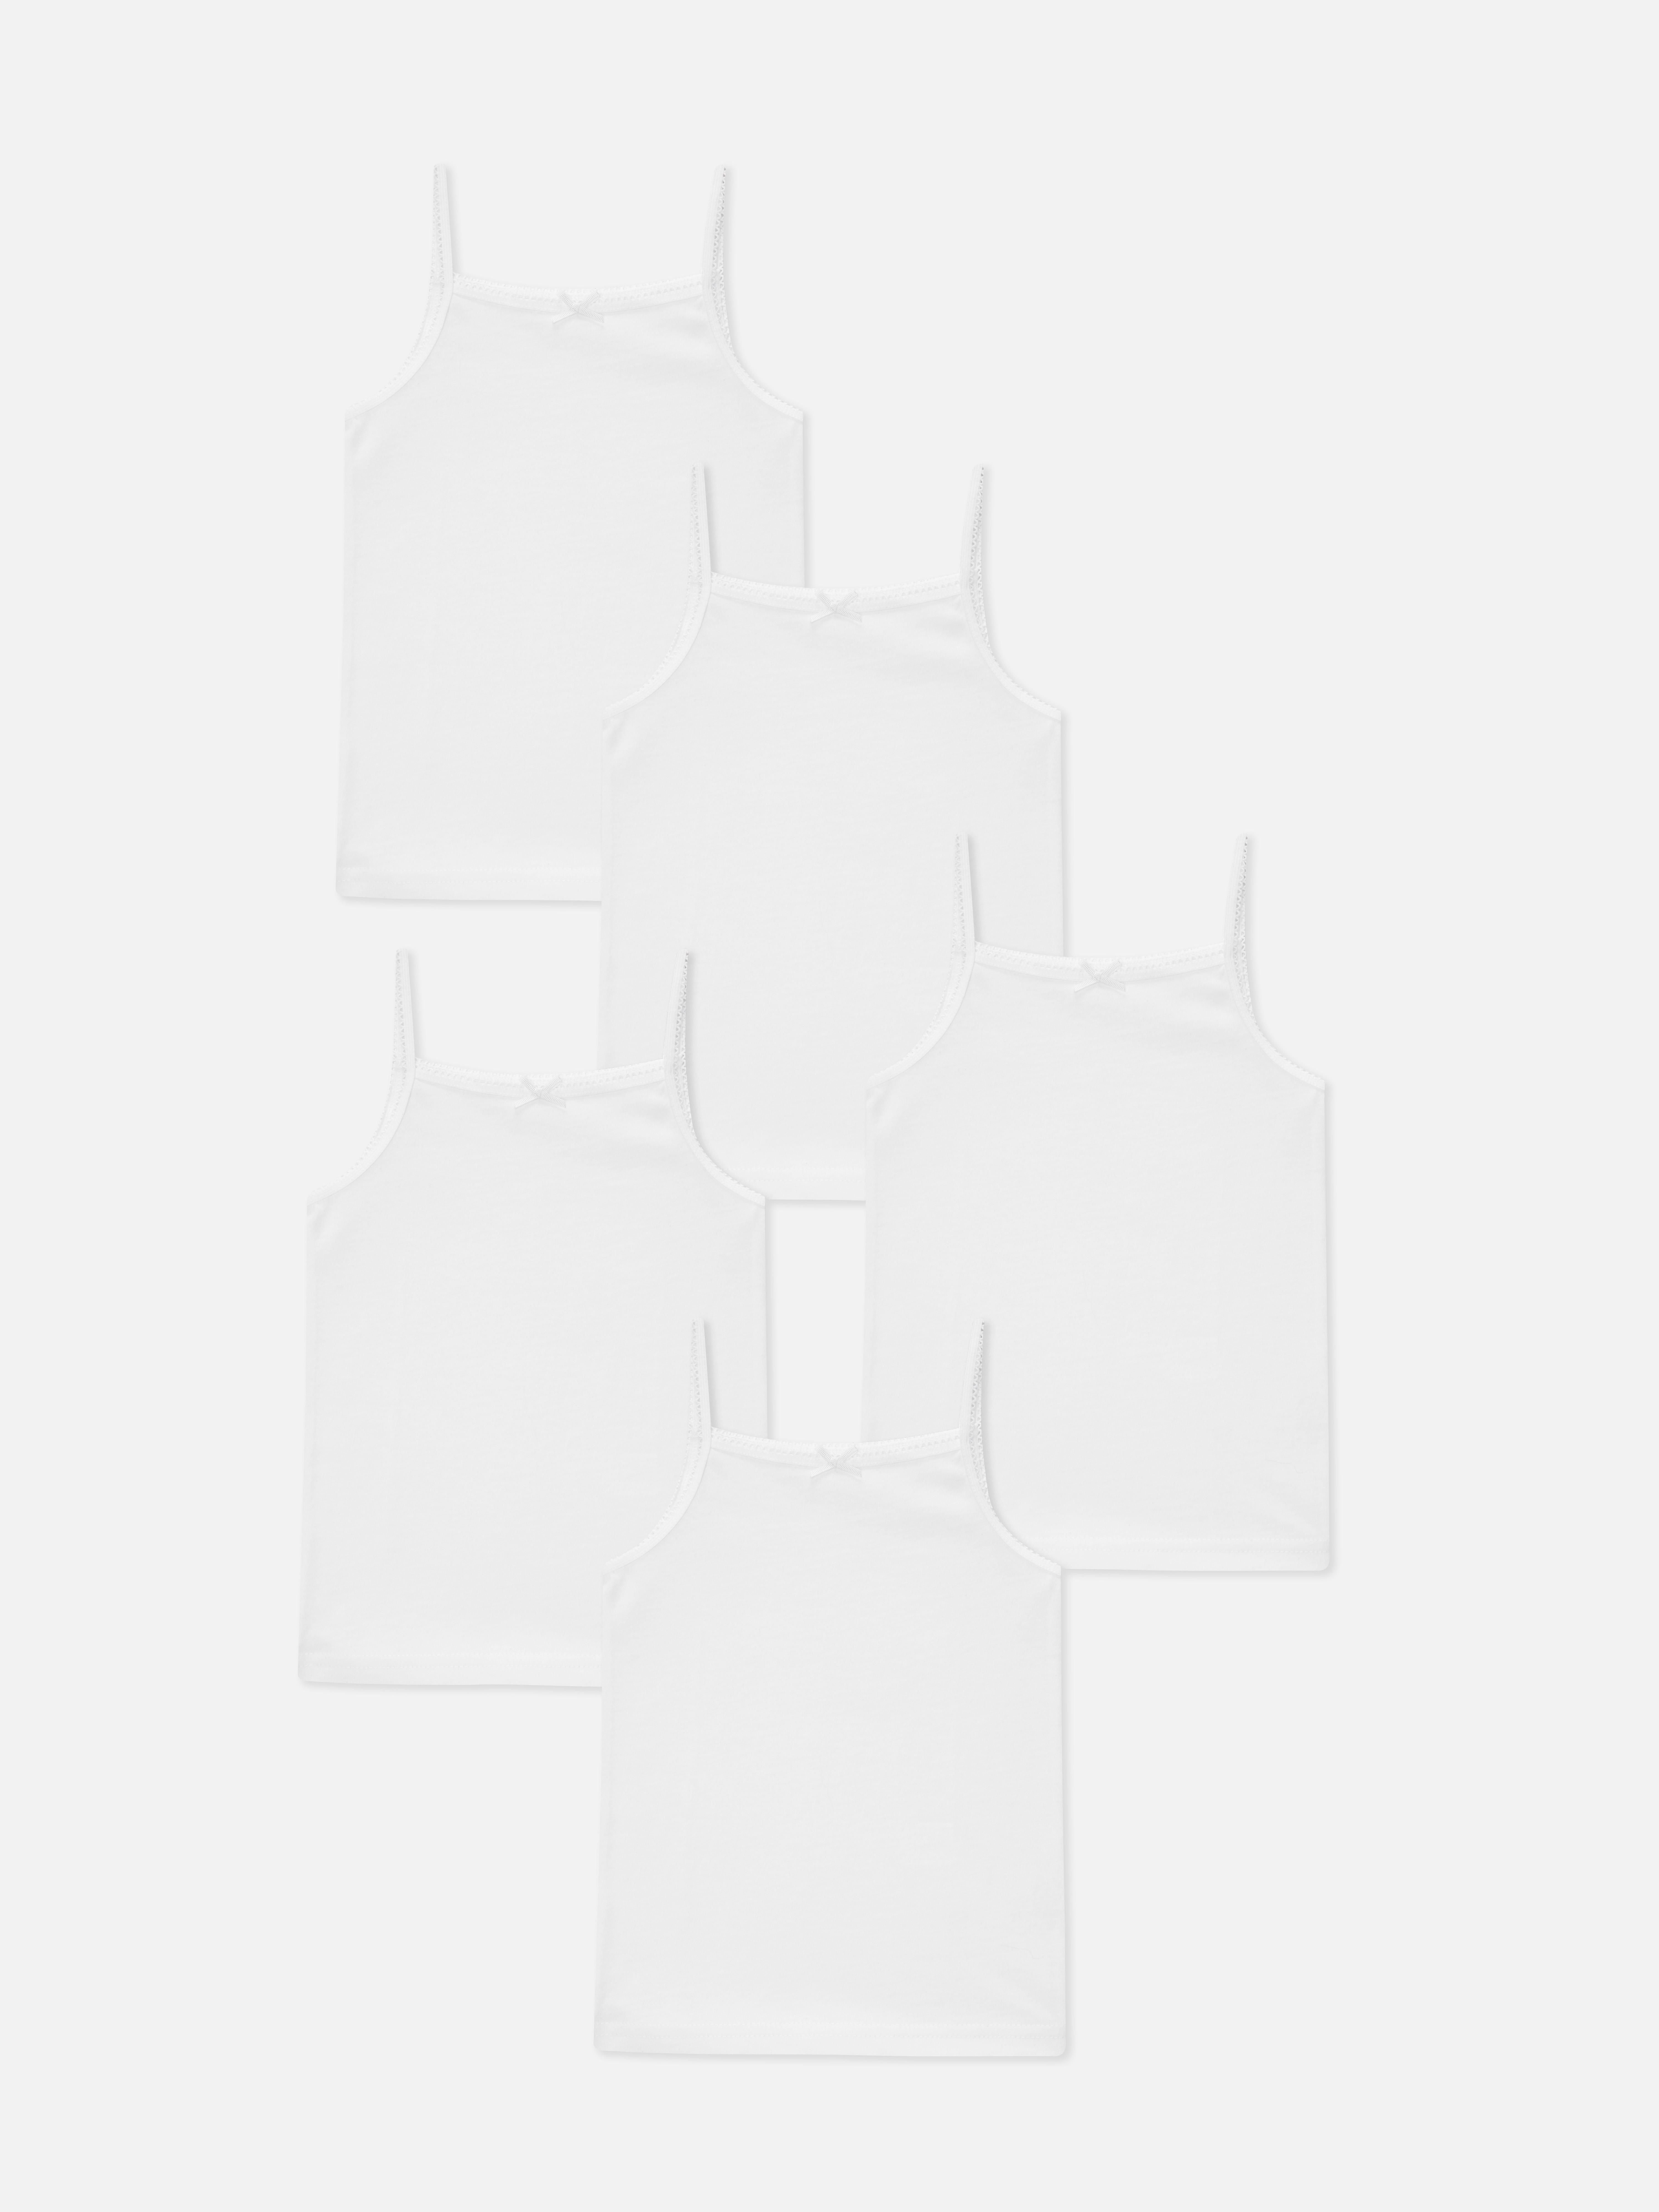 Tien steeg Umeki Basic hemdjes, set van 5 | Primark